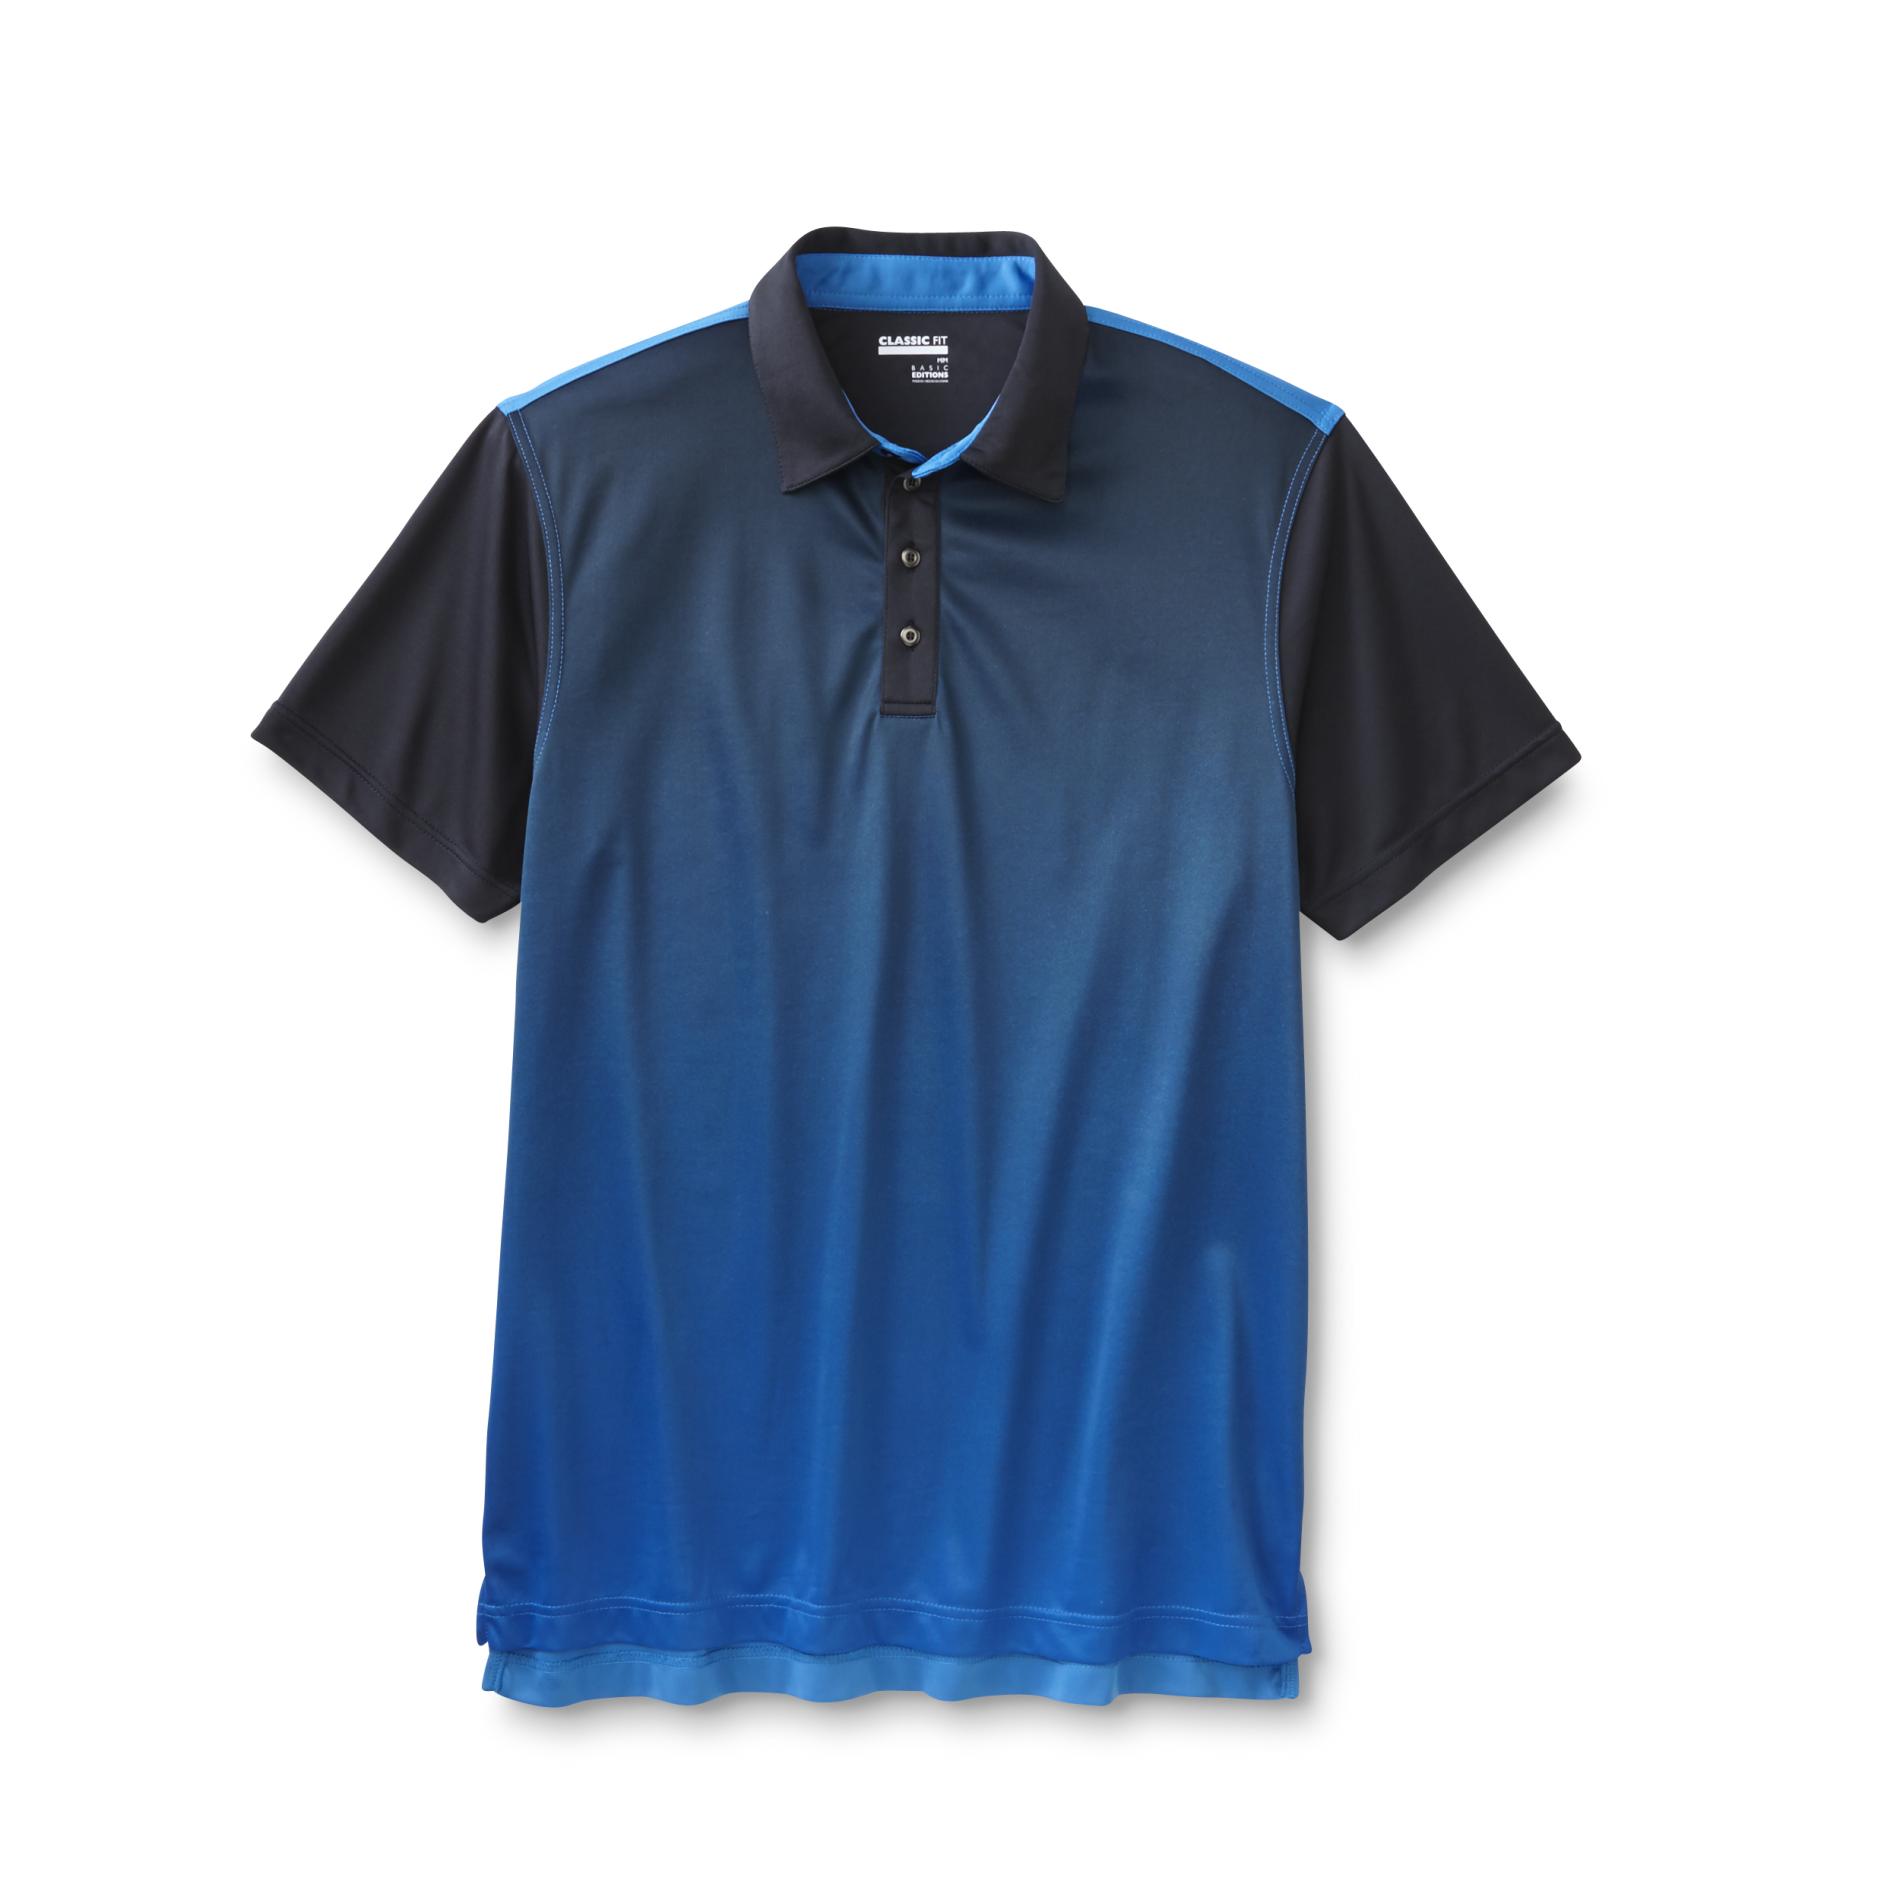 Basic Editions Men's Polo Shirt - Colorblock